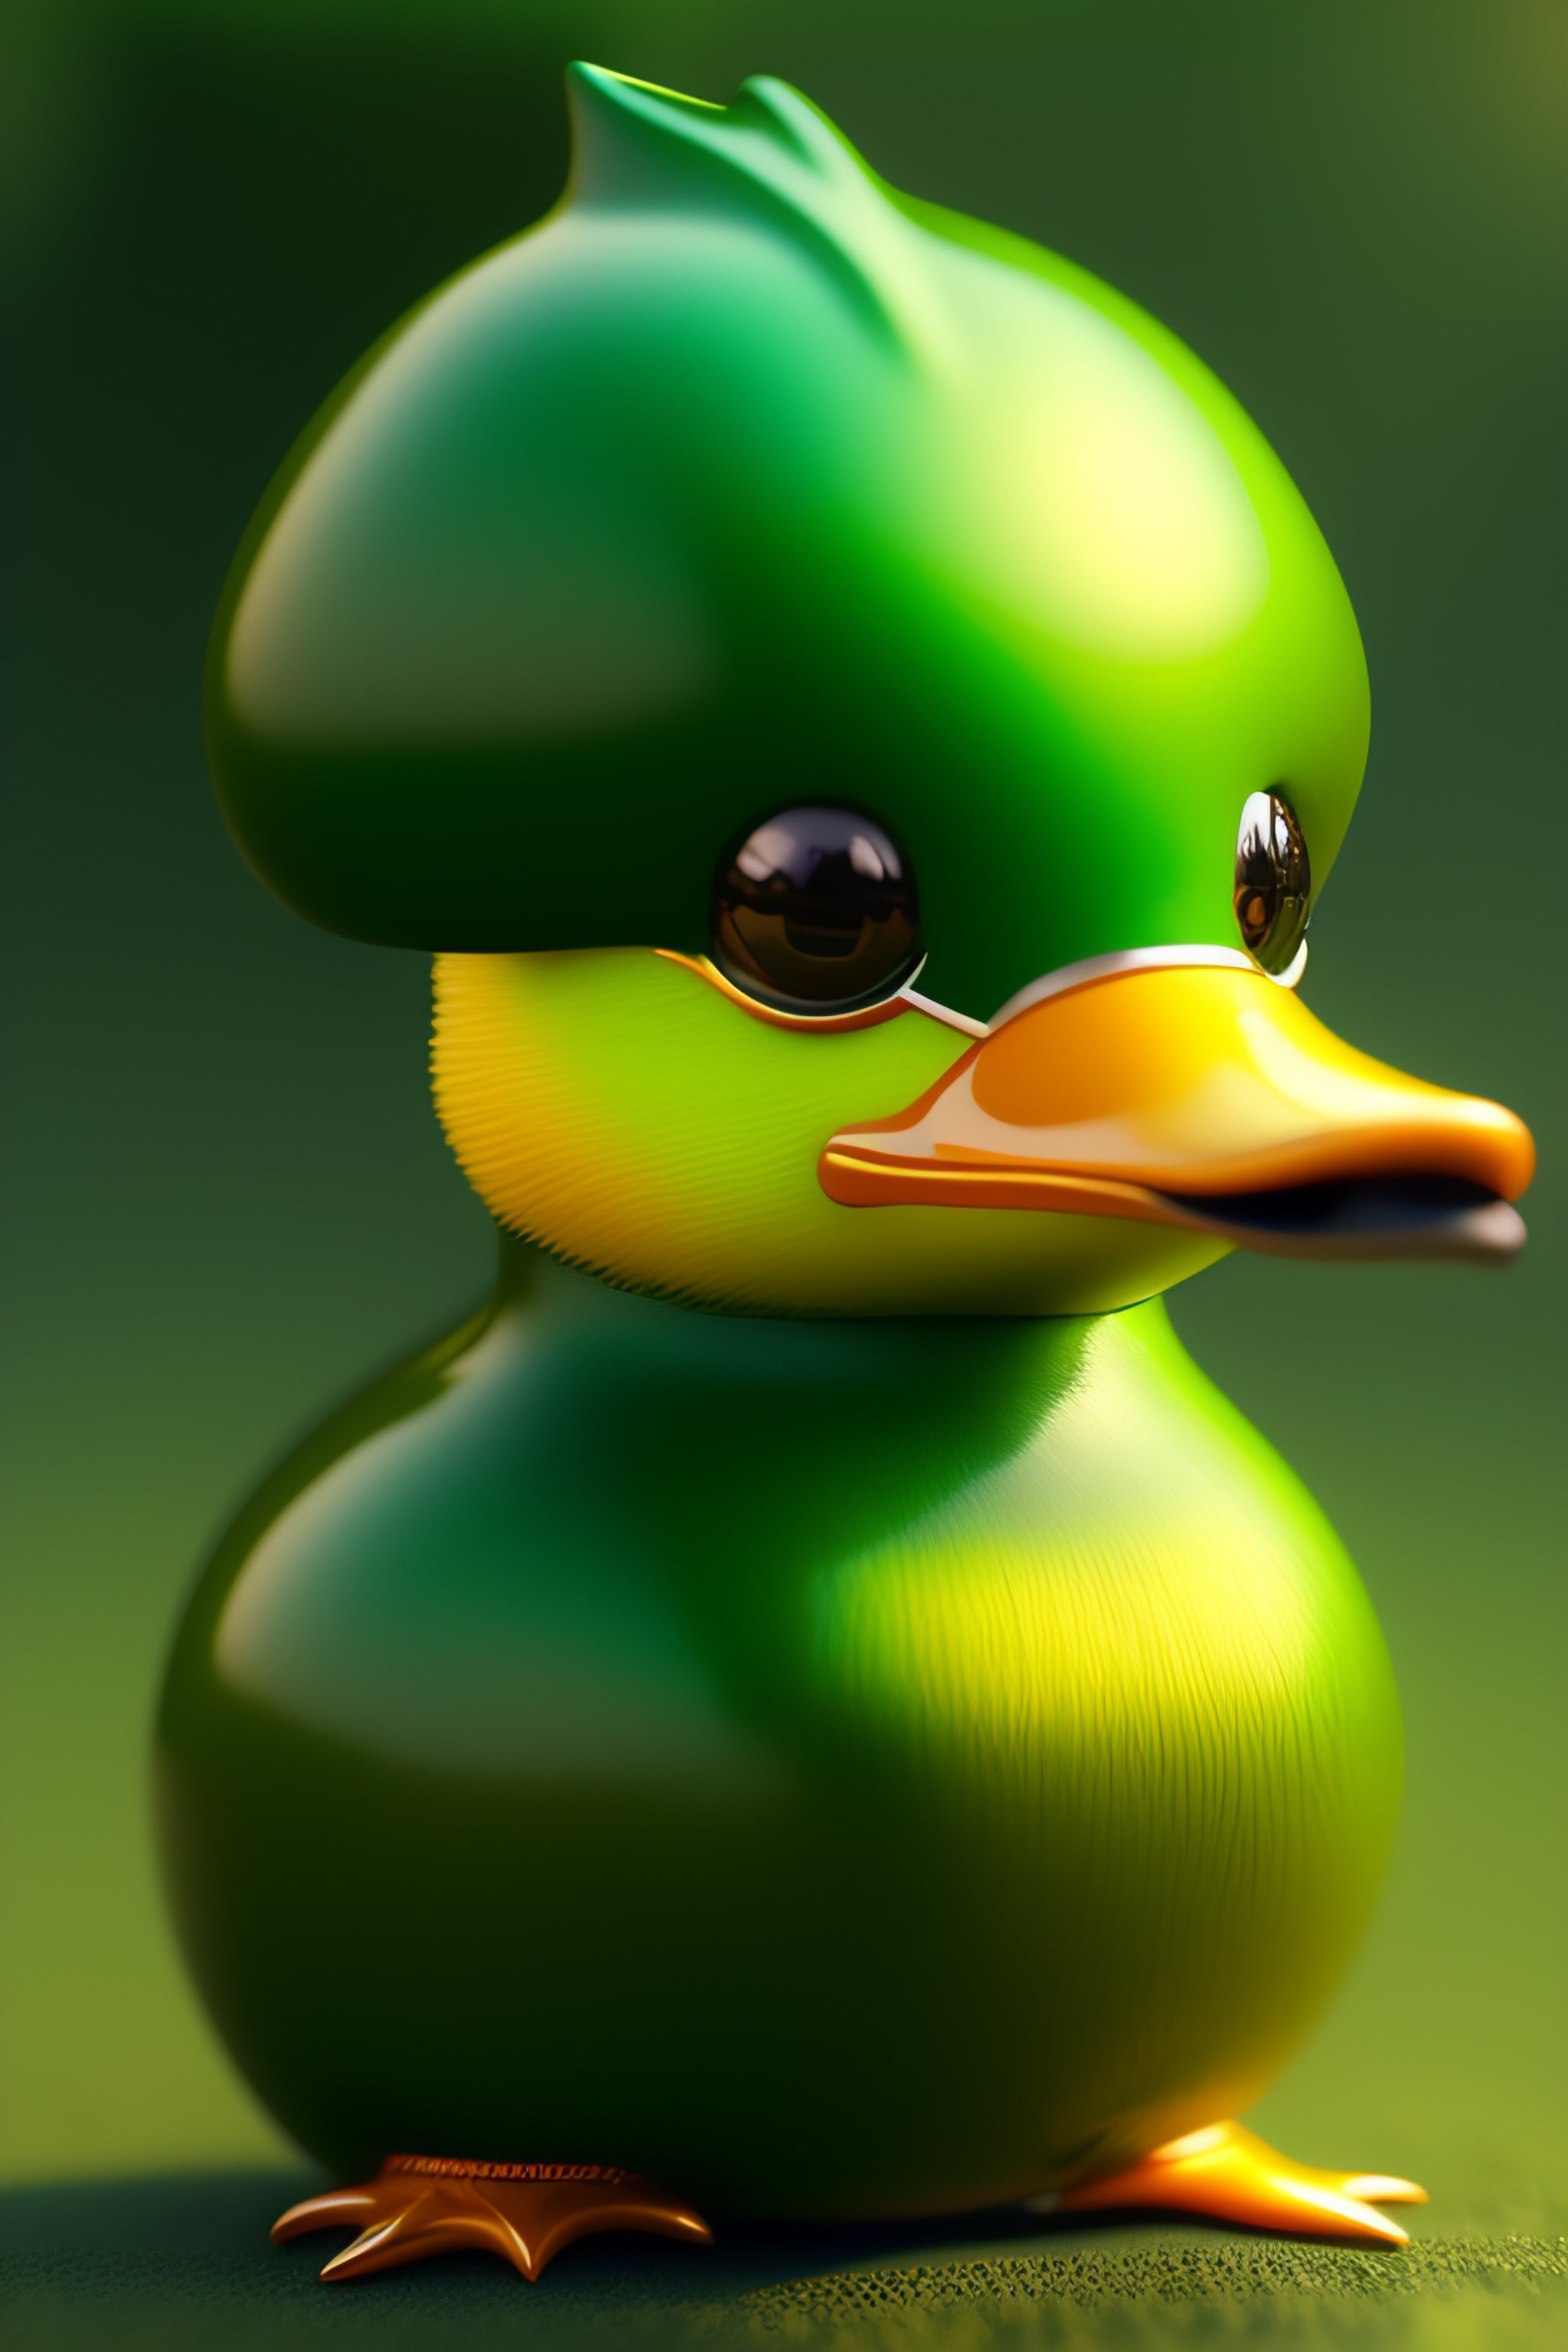 ArtStation - duck